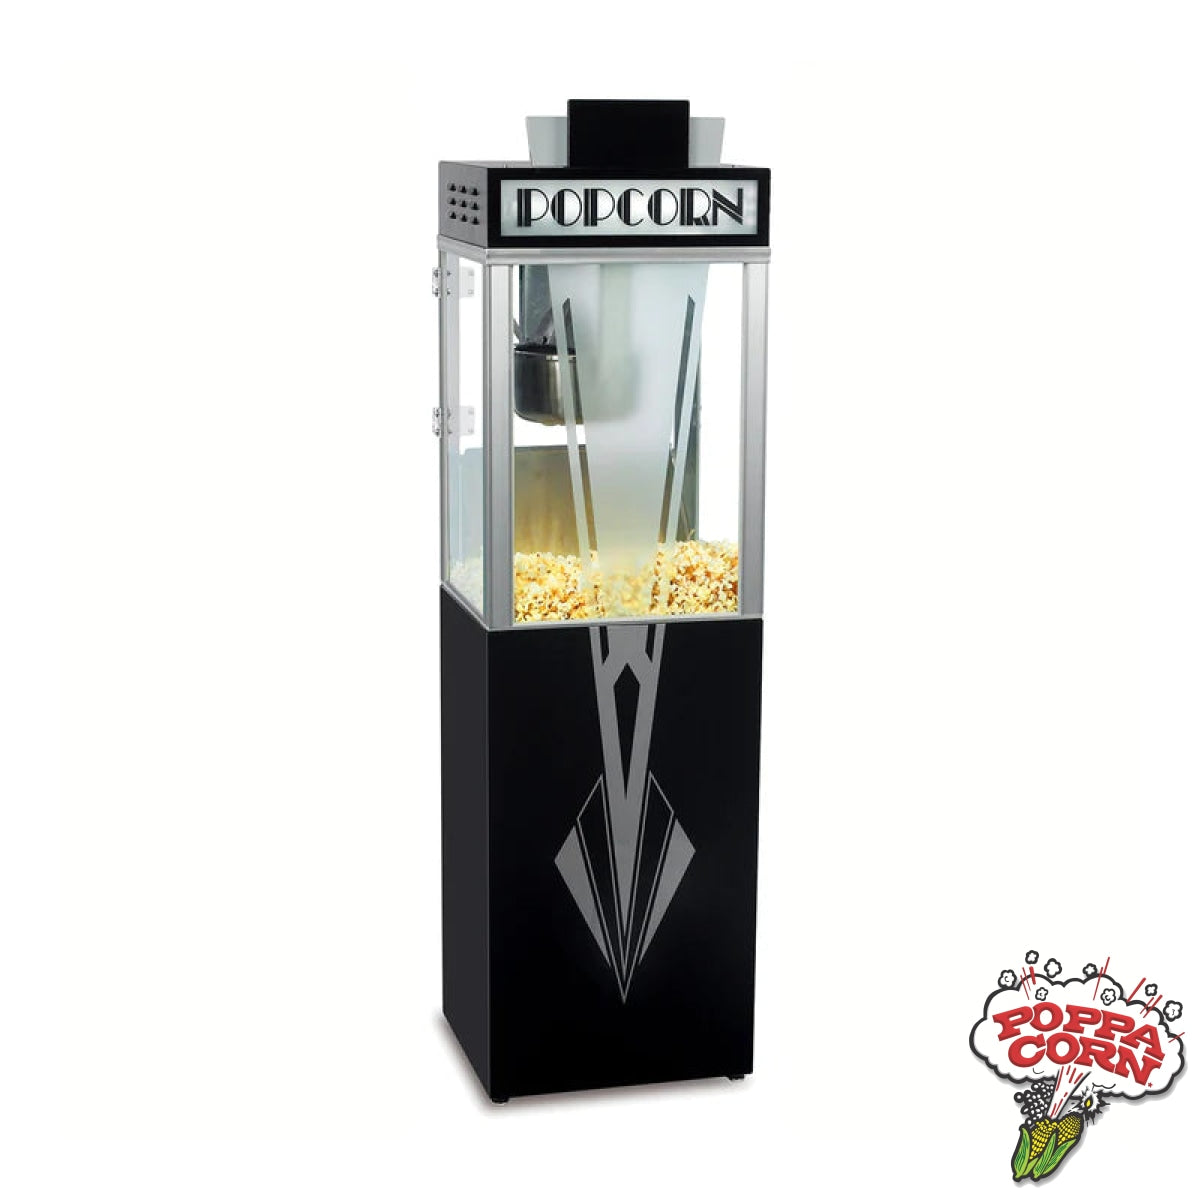 Art Deco Style Popcorn Machine - GM2660FG - Poppa Corn Corp